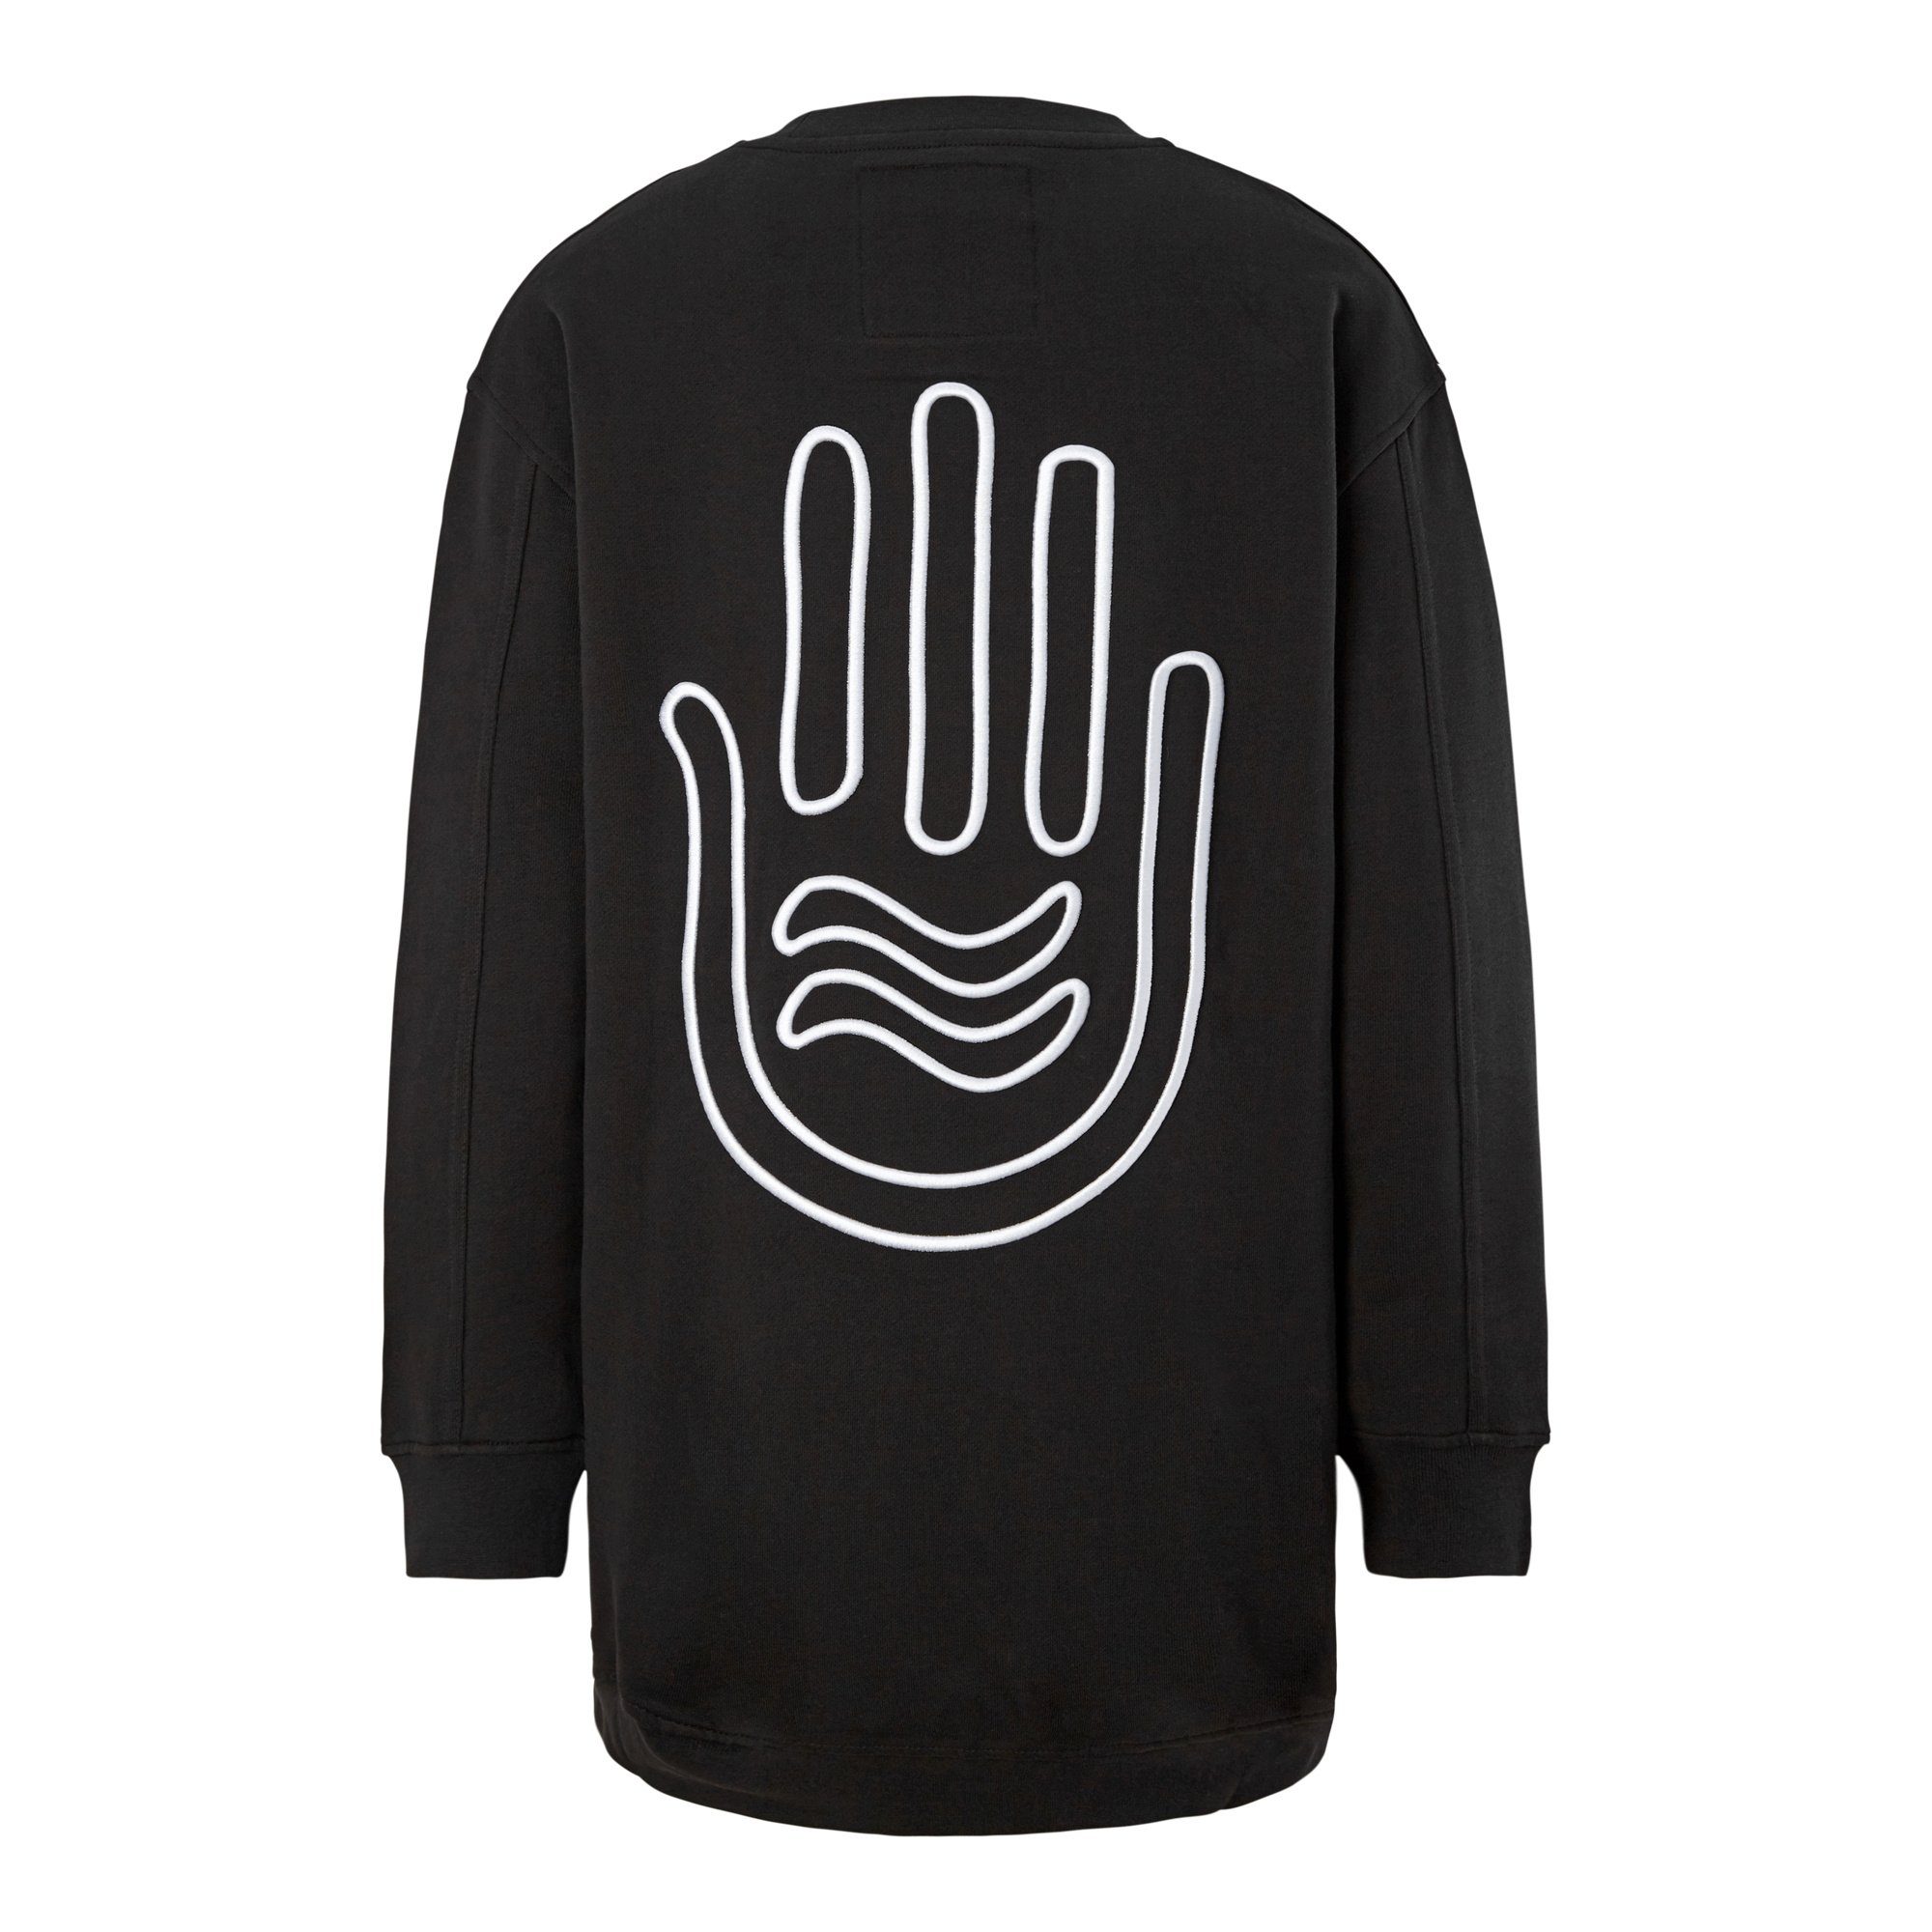 SeaYA Sweatshirt Stickerei Sweatshirt lang Biobaumwolle schwarz